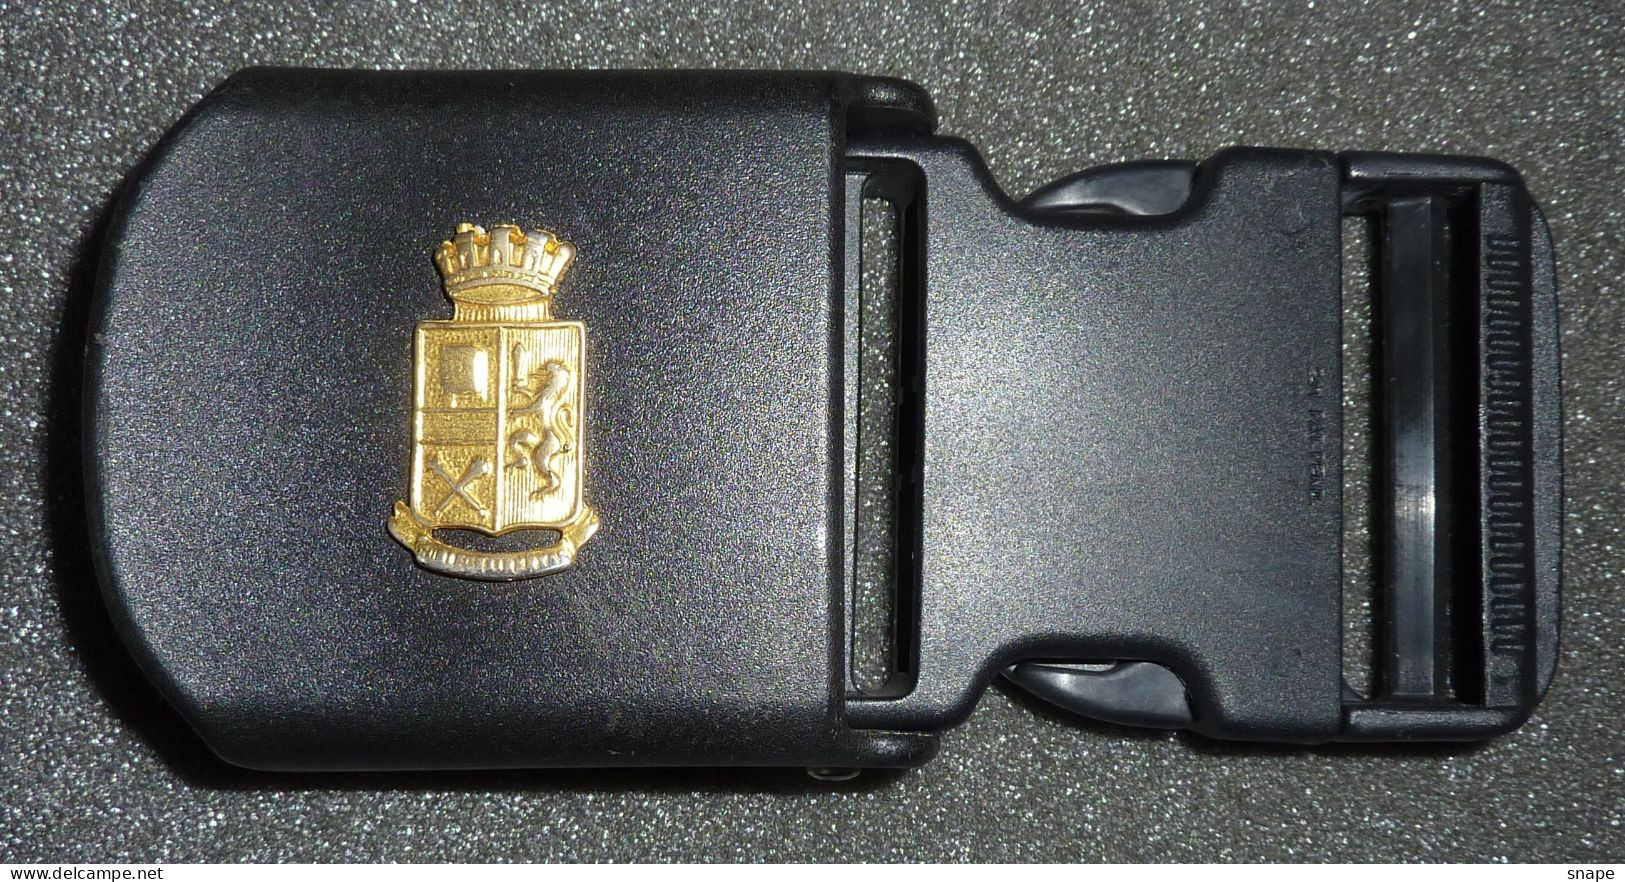 FIBBIA CINTURONE OPERATIVO Polizia - Obsoleta Usata - Italian Police Belt Buckle - Used (286-3) - Polizei